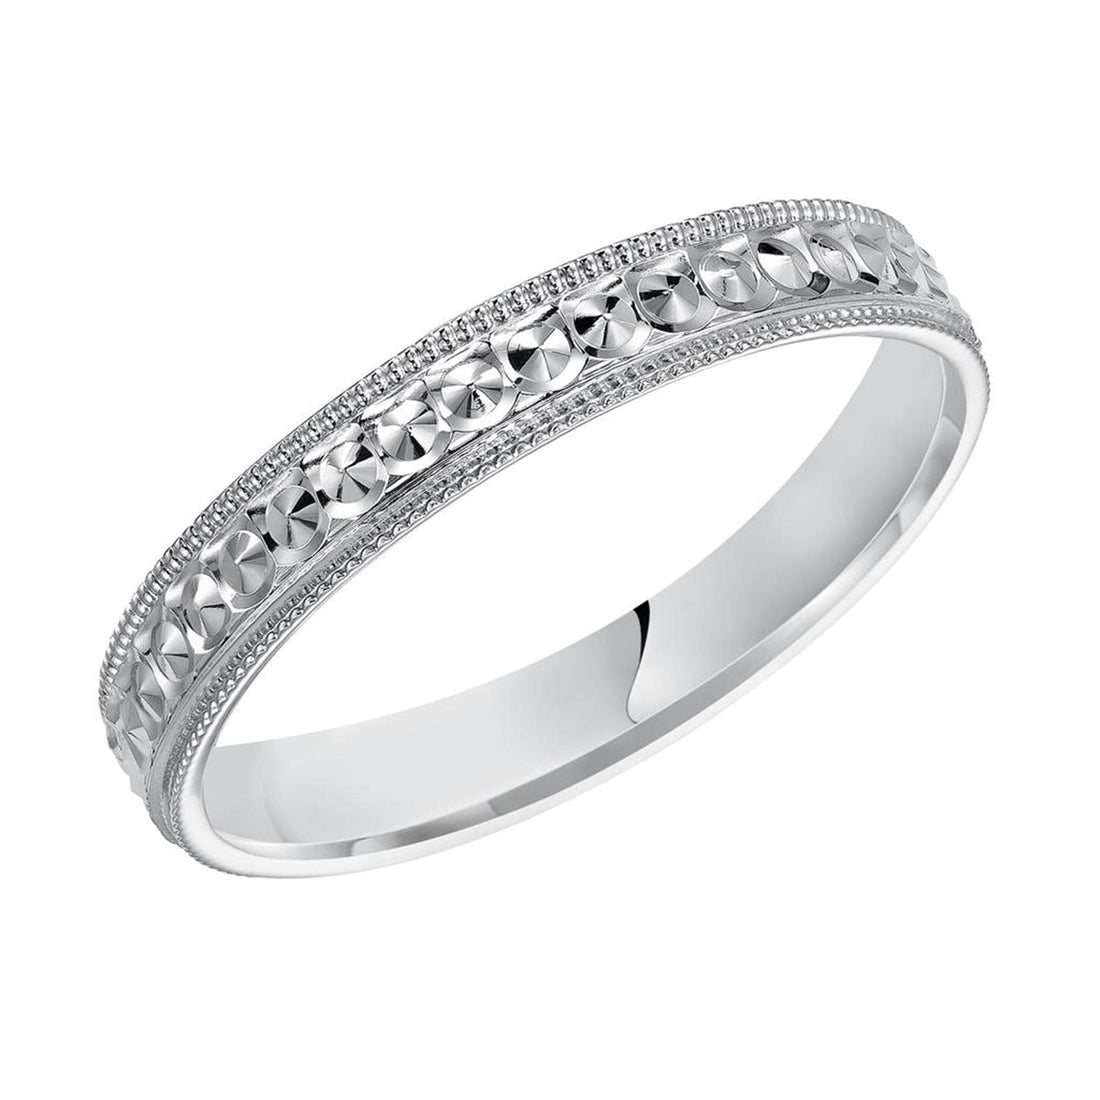 White Gold Engraved Women's Wedding Band Ring